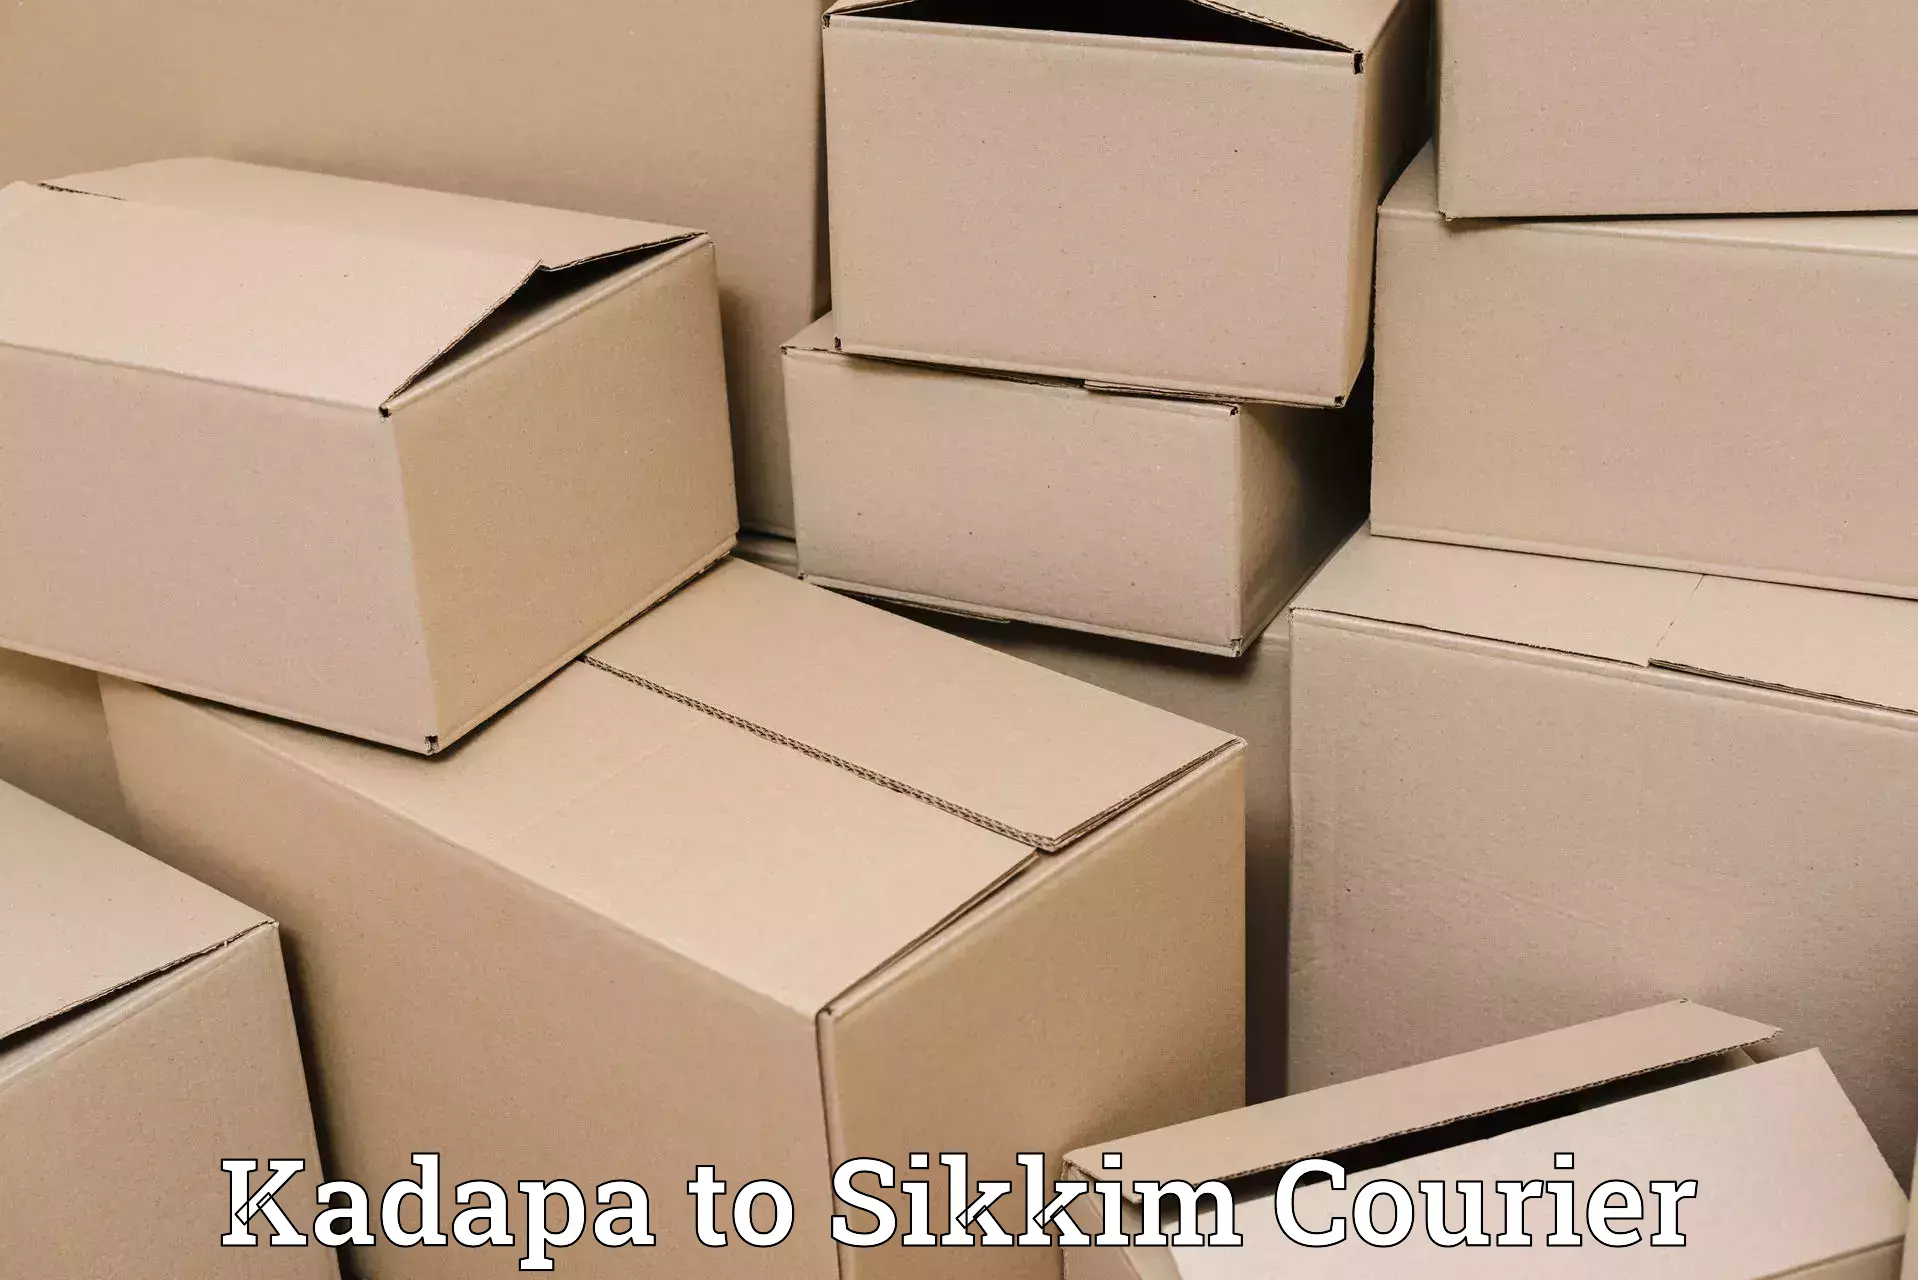 International courier networks Kadapa to Ravangla